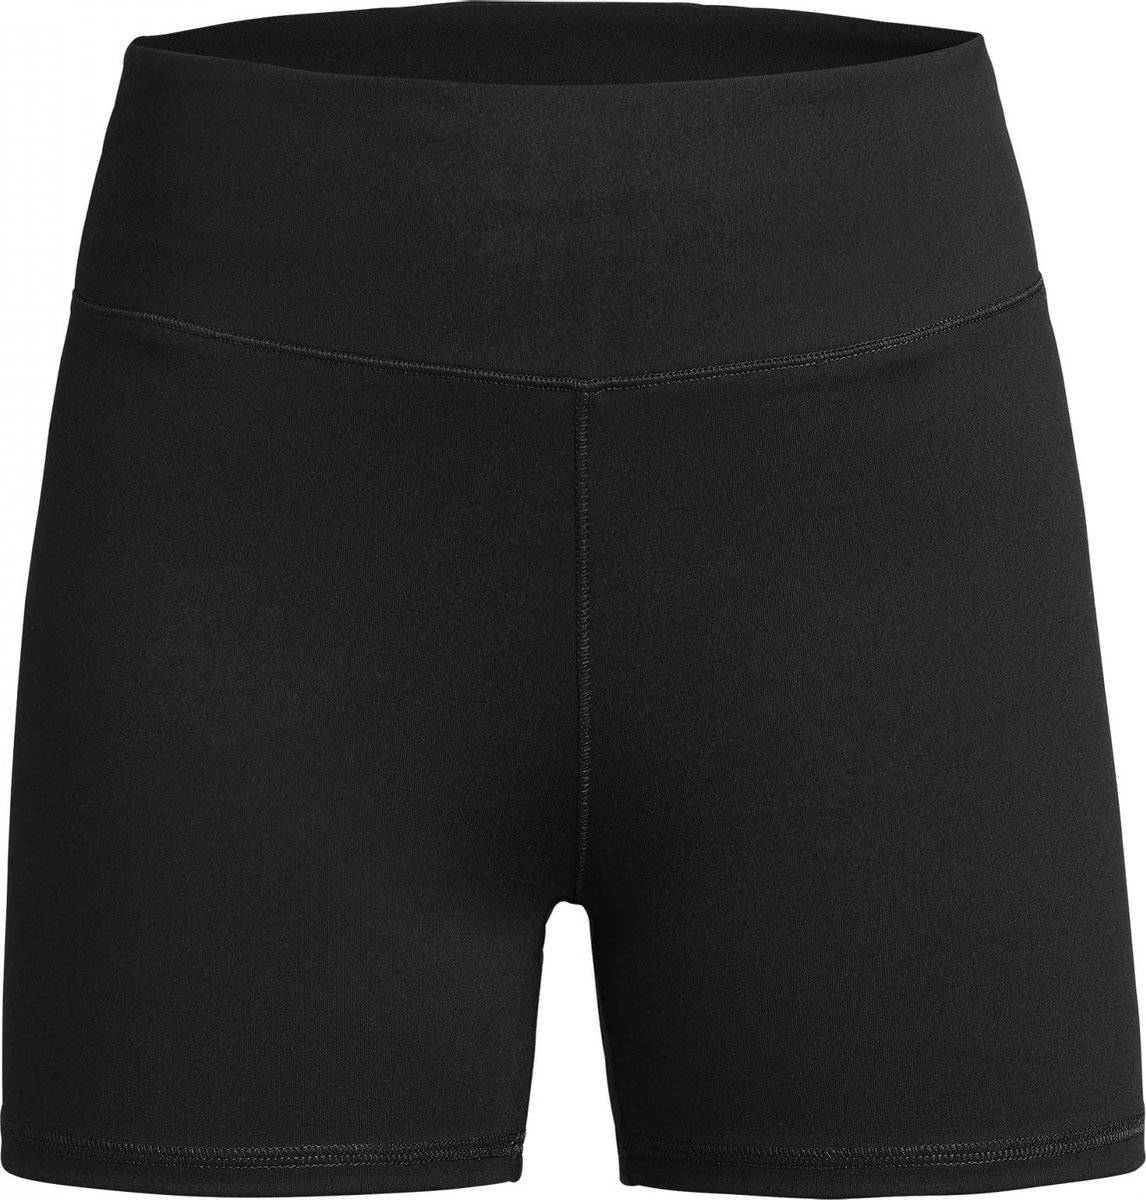 Röhnisch Nora Lasting Hot Pants Women Black - XL